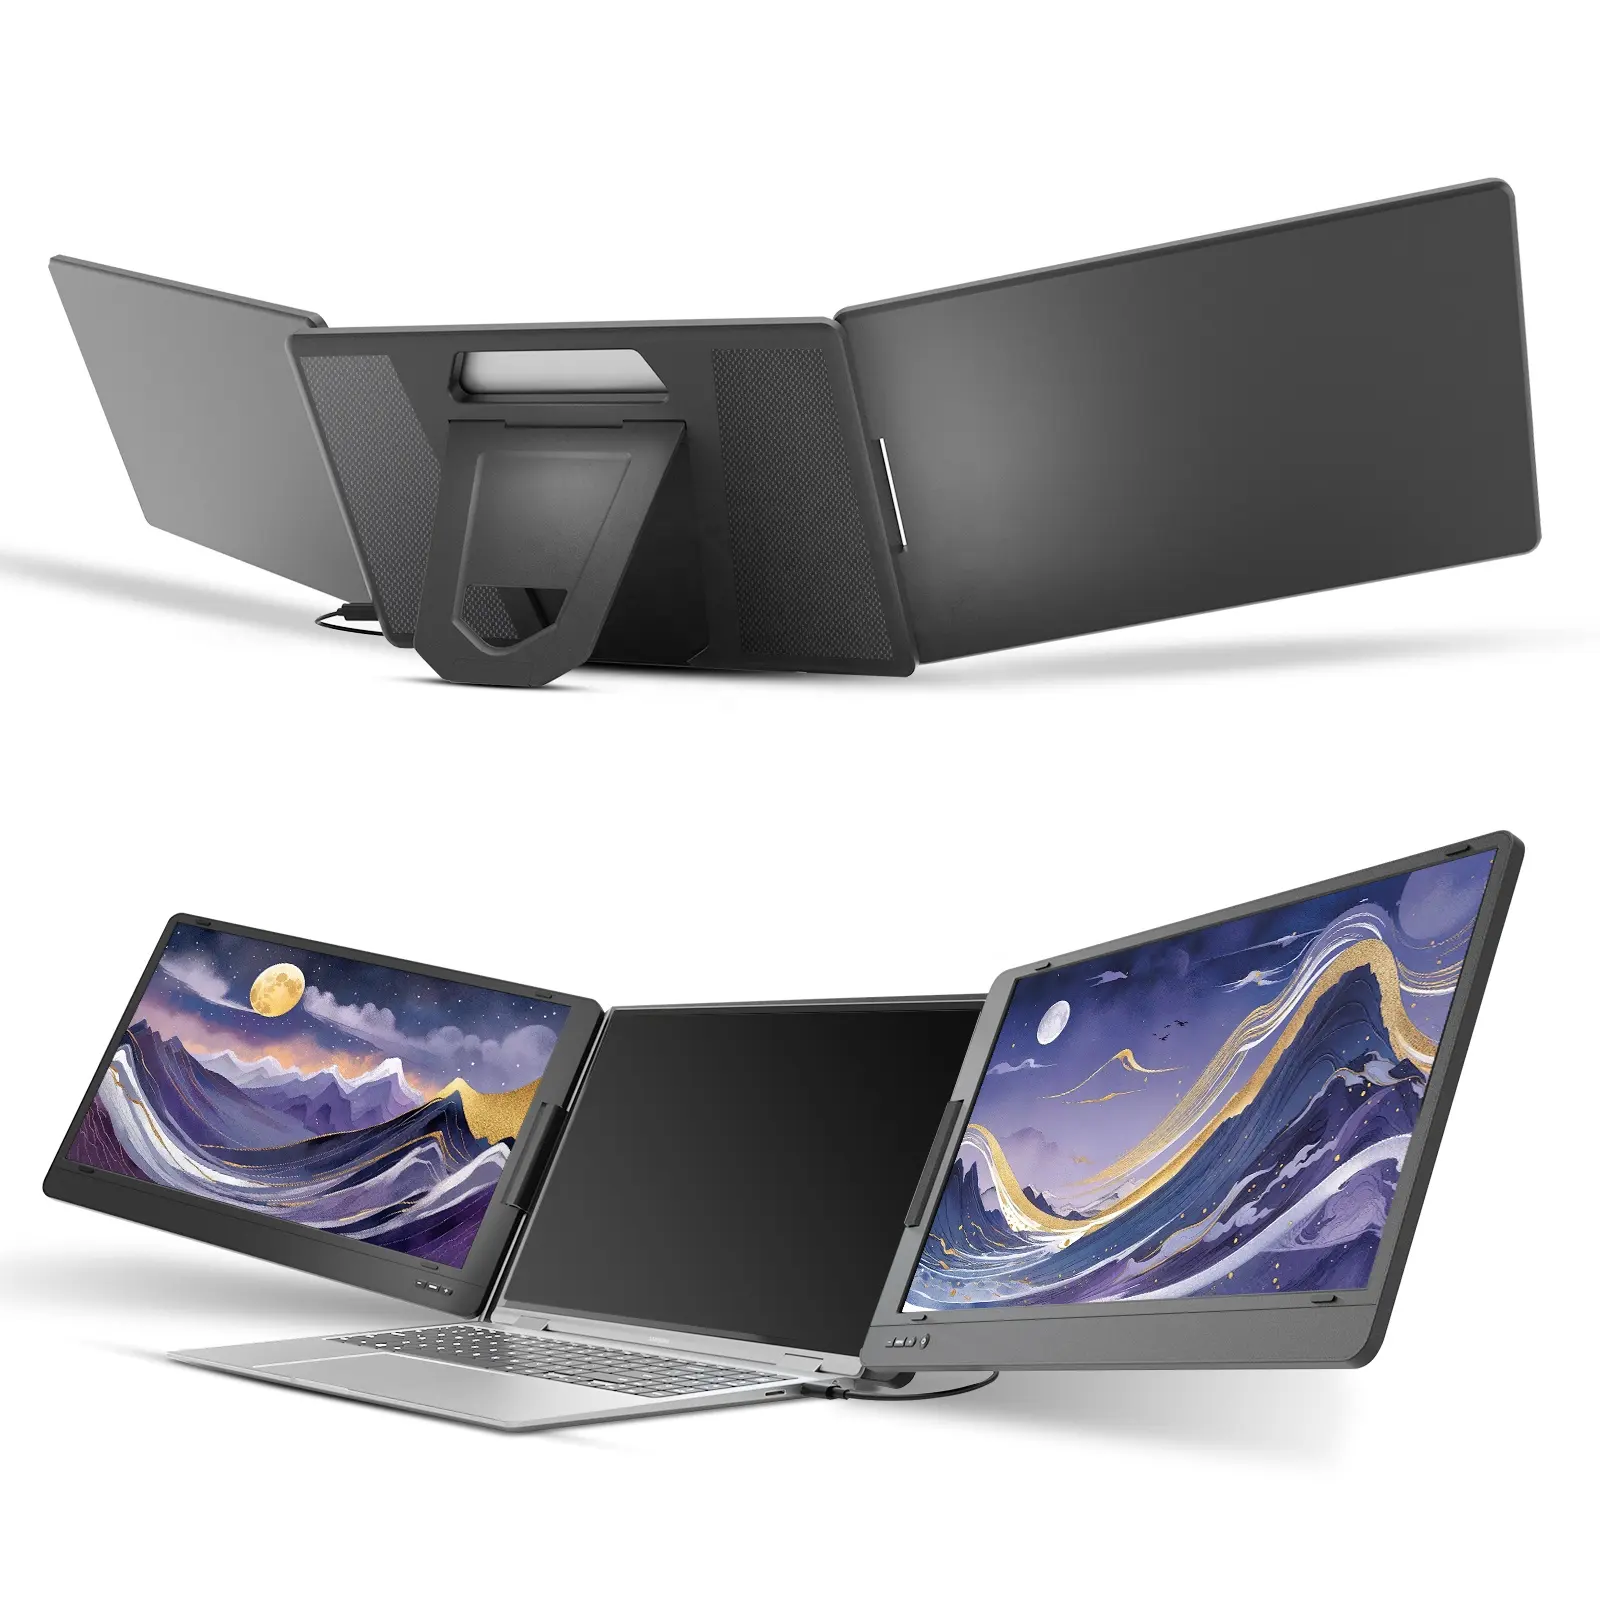 Monitor portabel tiga Tipe C 14 ", untuk Laptop Notebook layar game 1080P Full HD layar ekstensi satu kabel